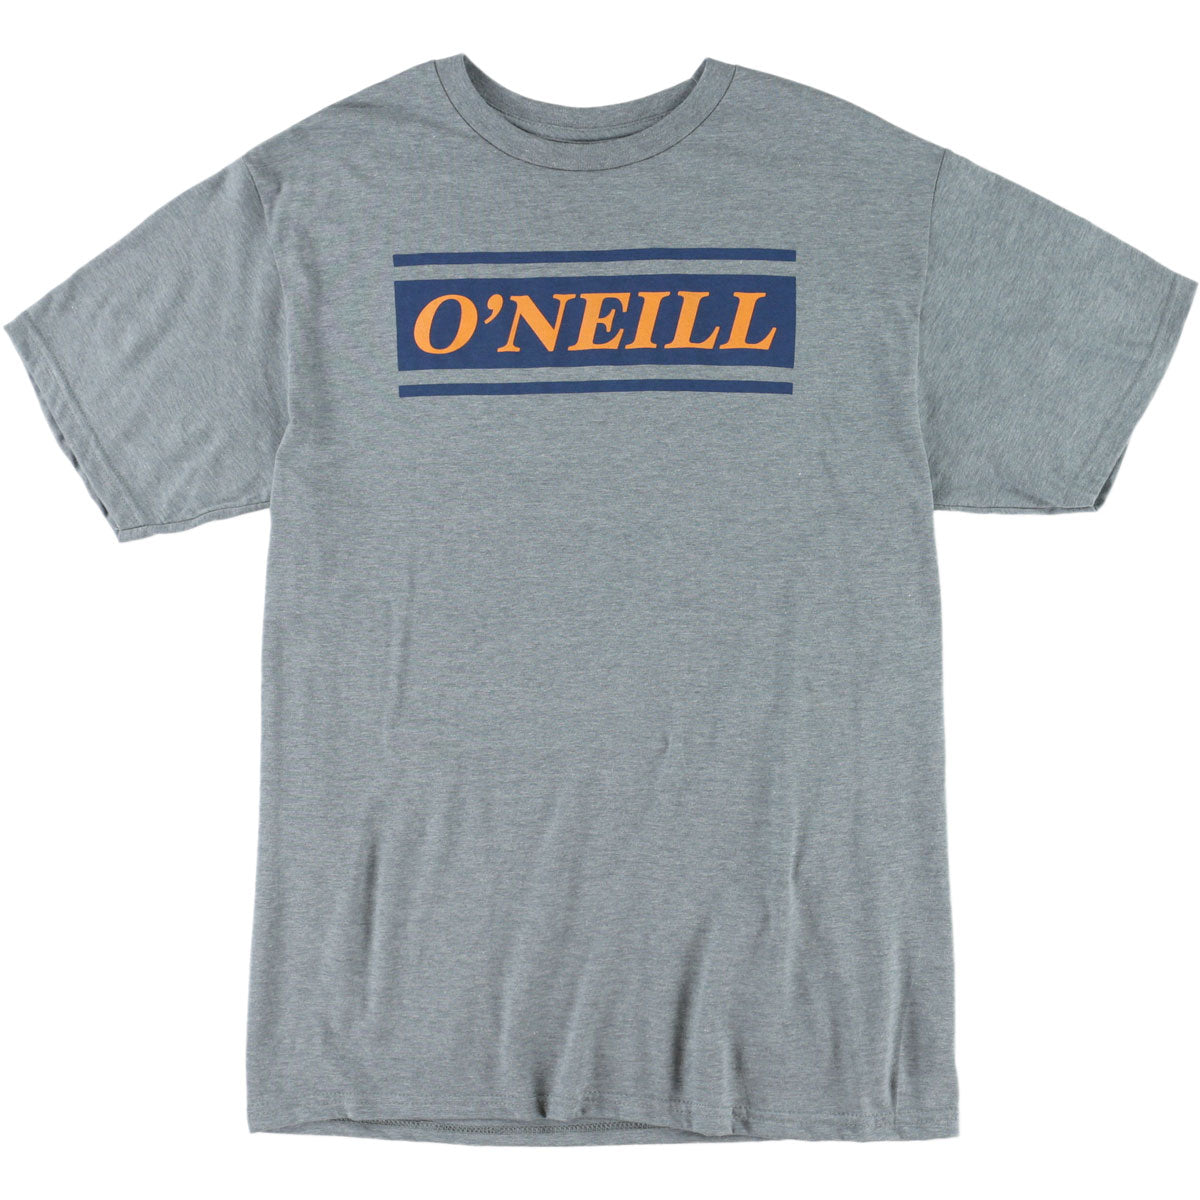 O'Neill Bar Men's Short-Sleeve Shirts - Medium Heather Grey